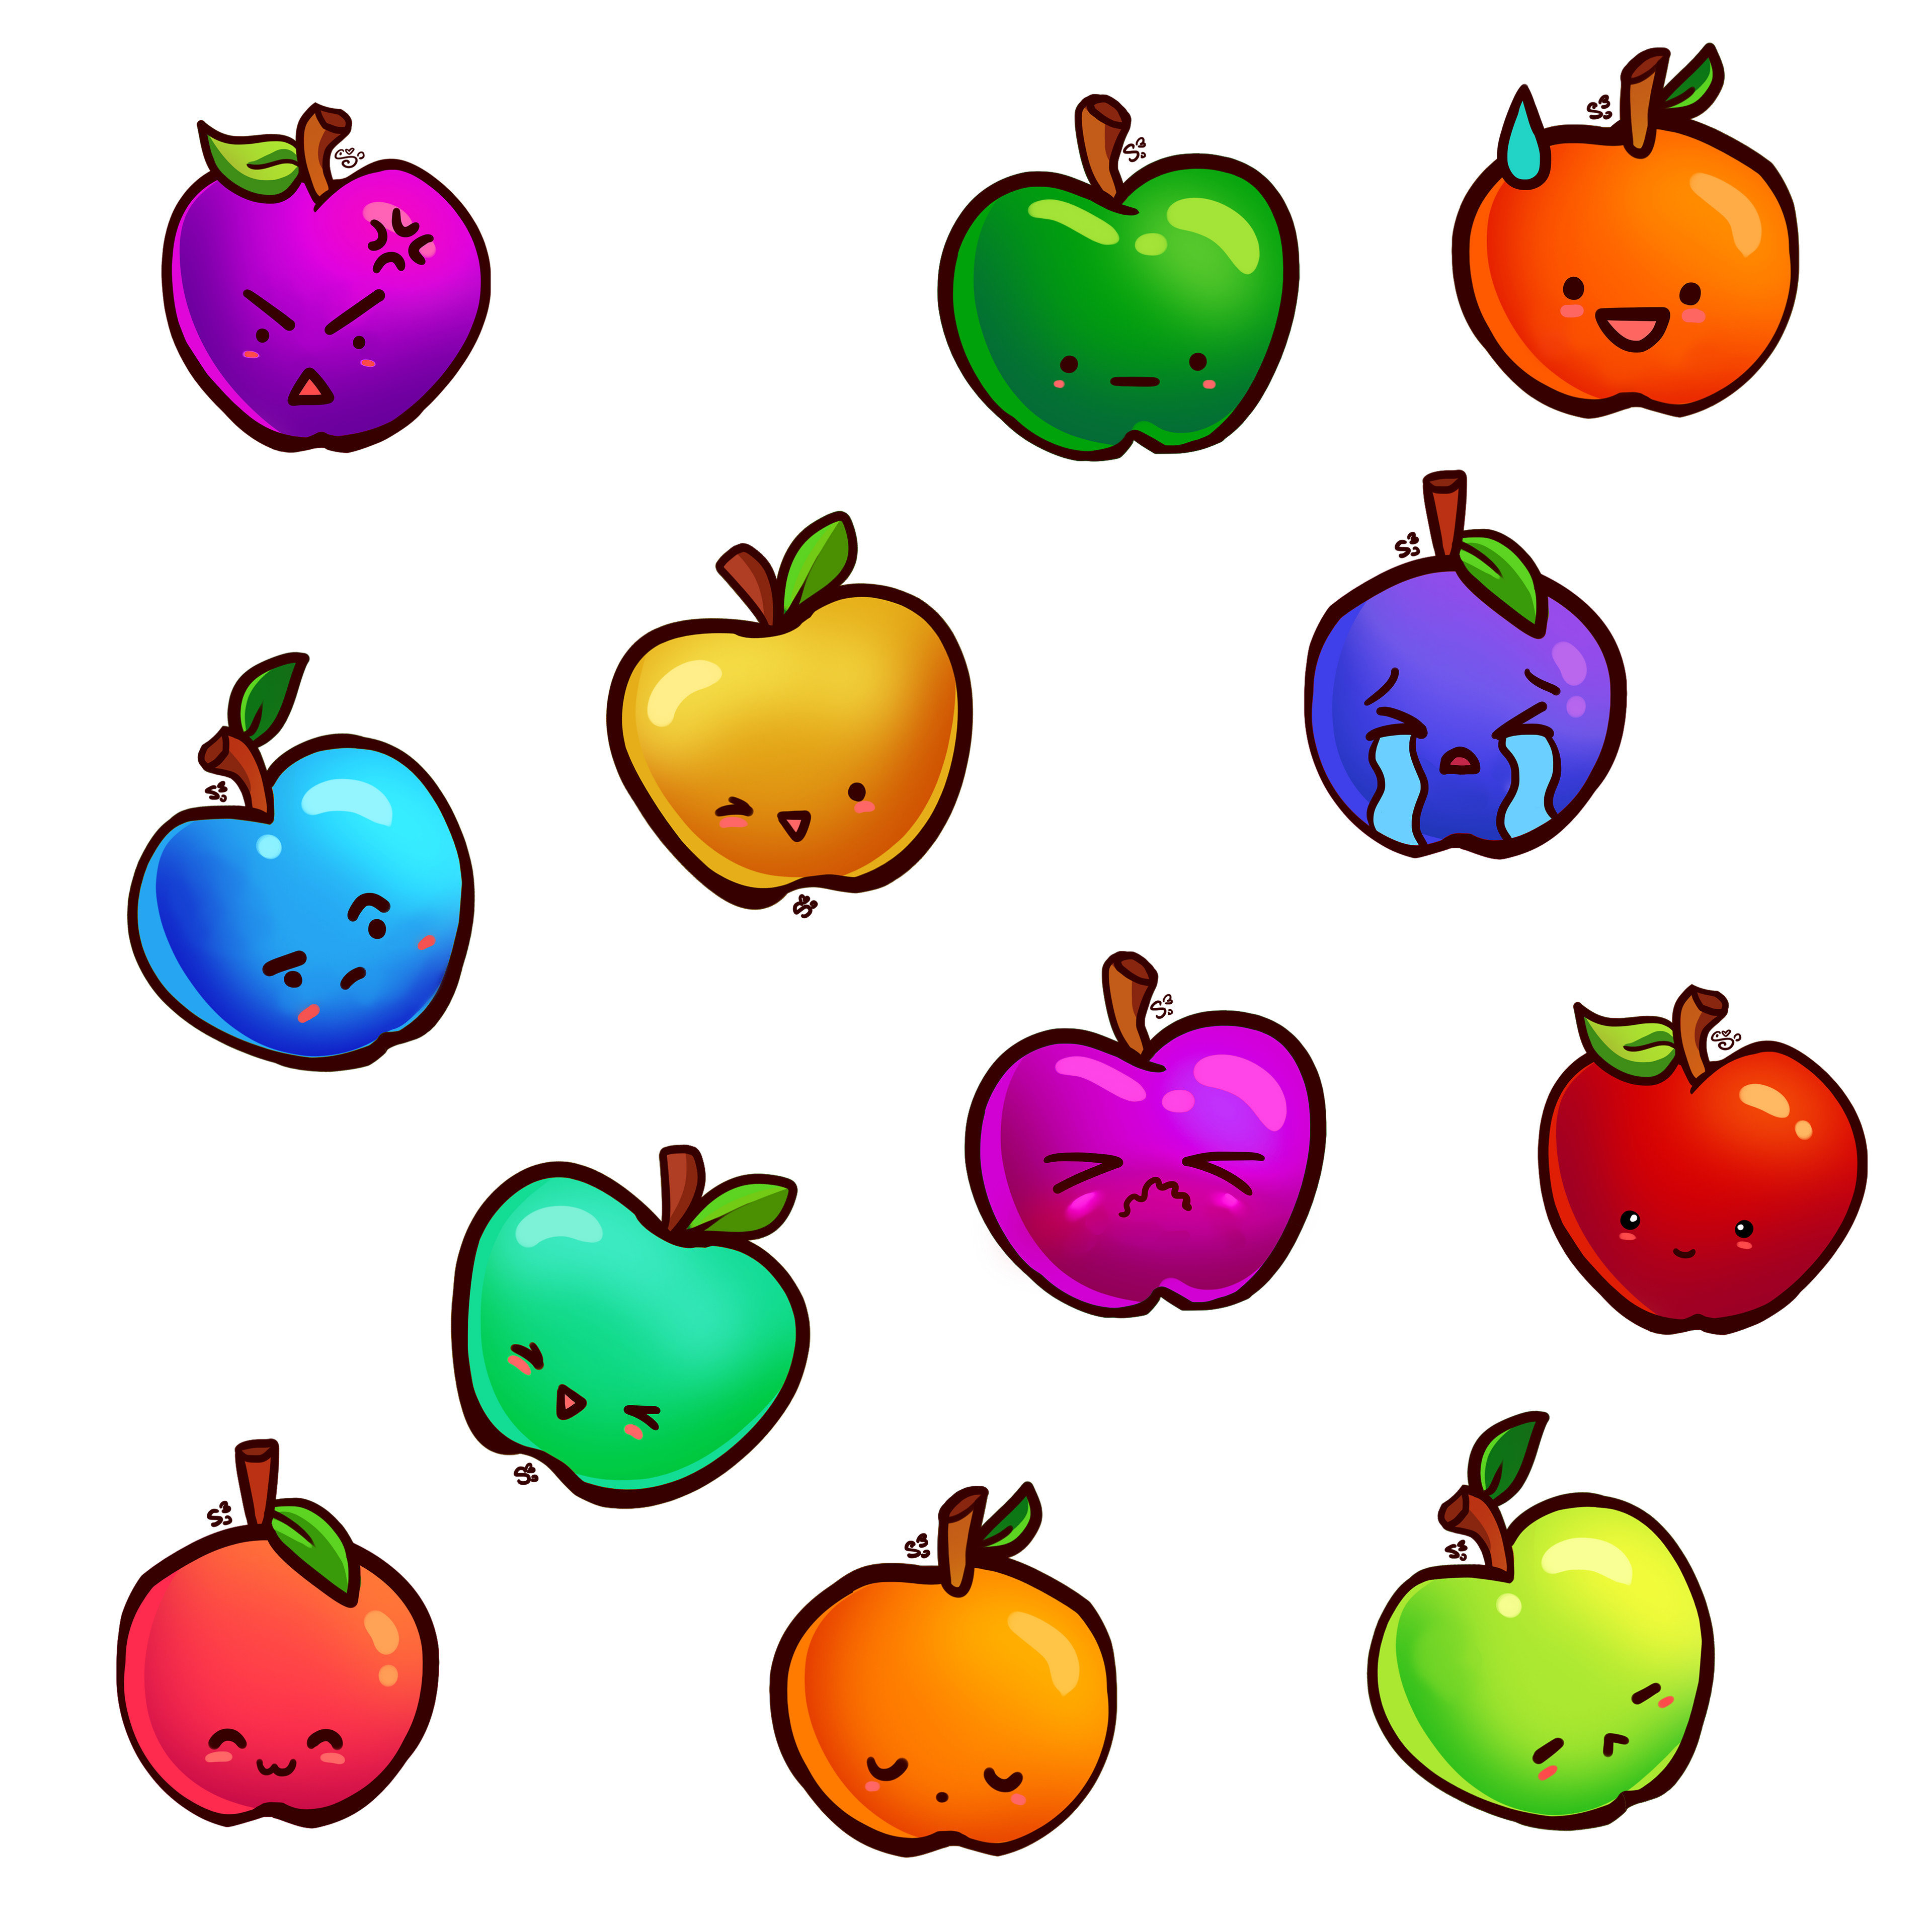 Poomki - Apples Expansion Pack